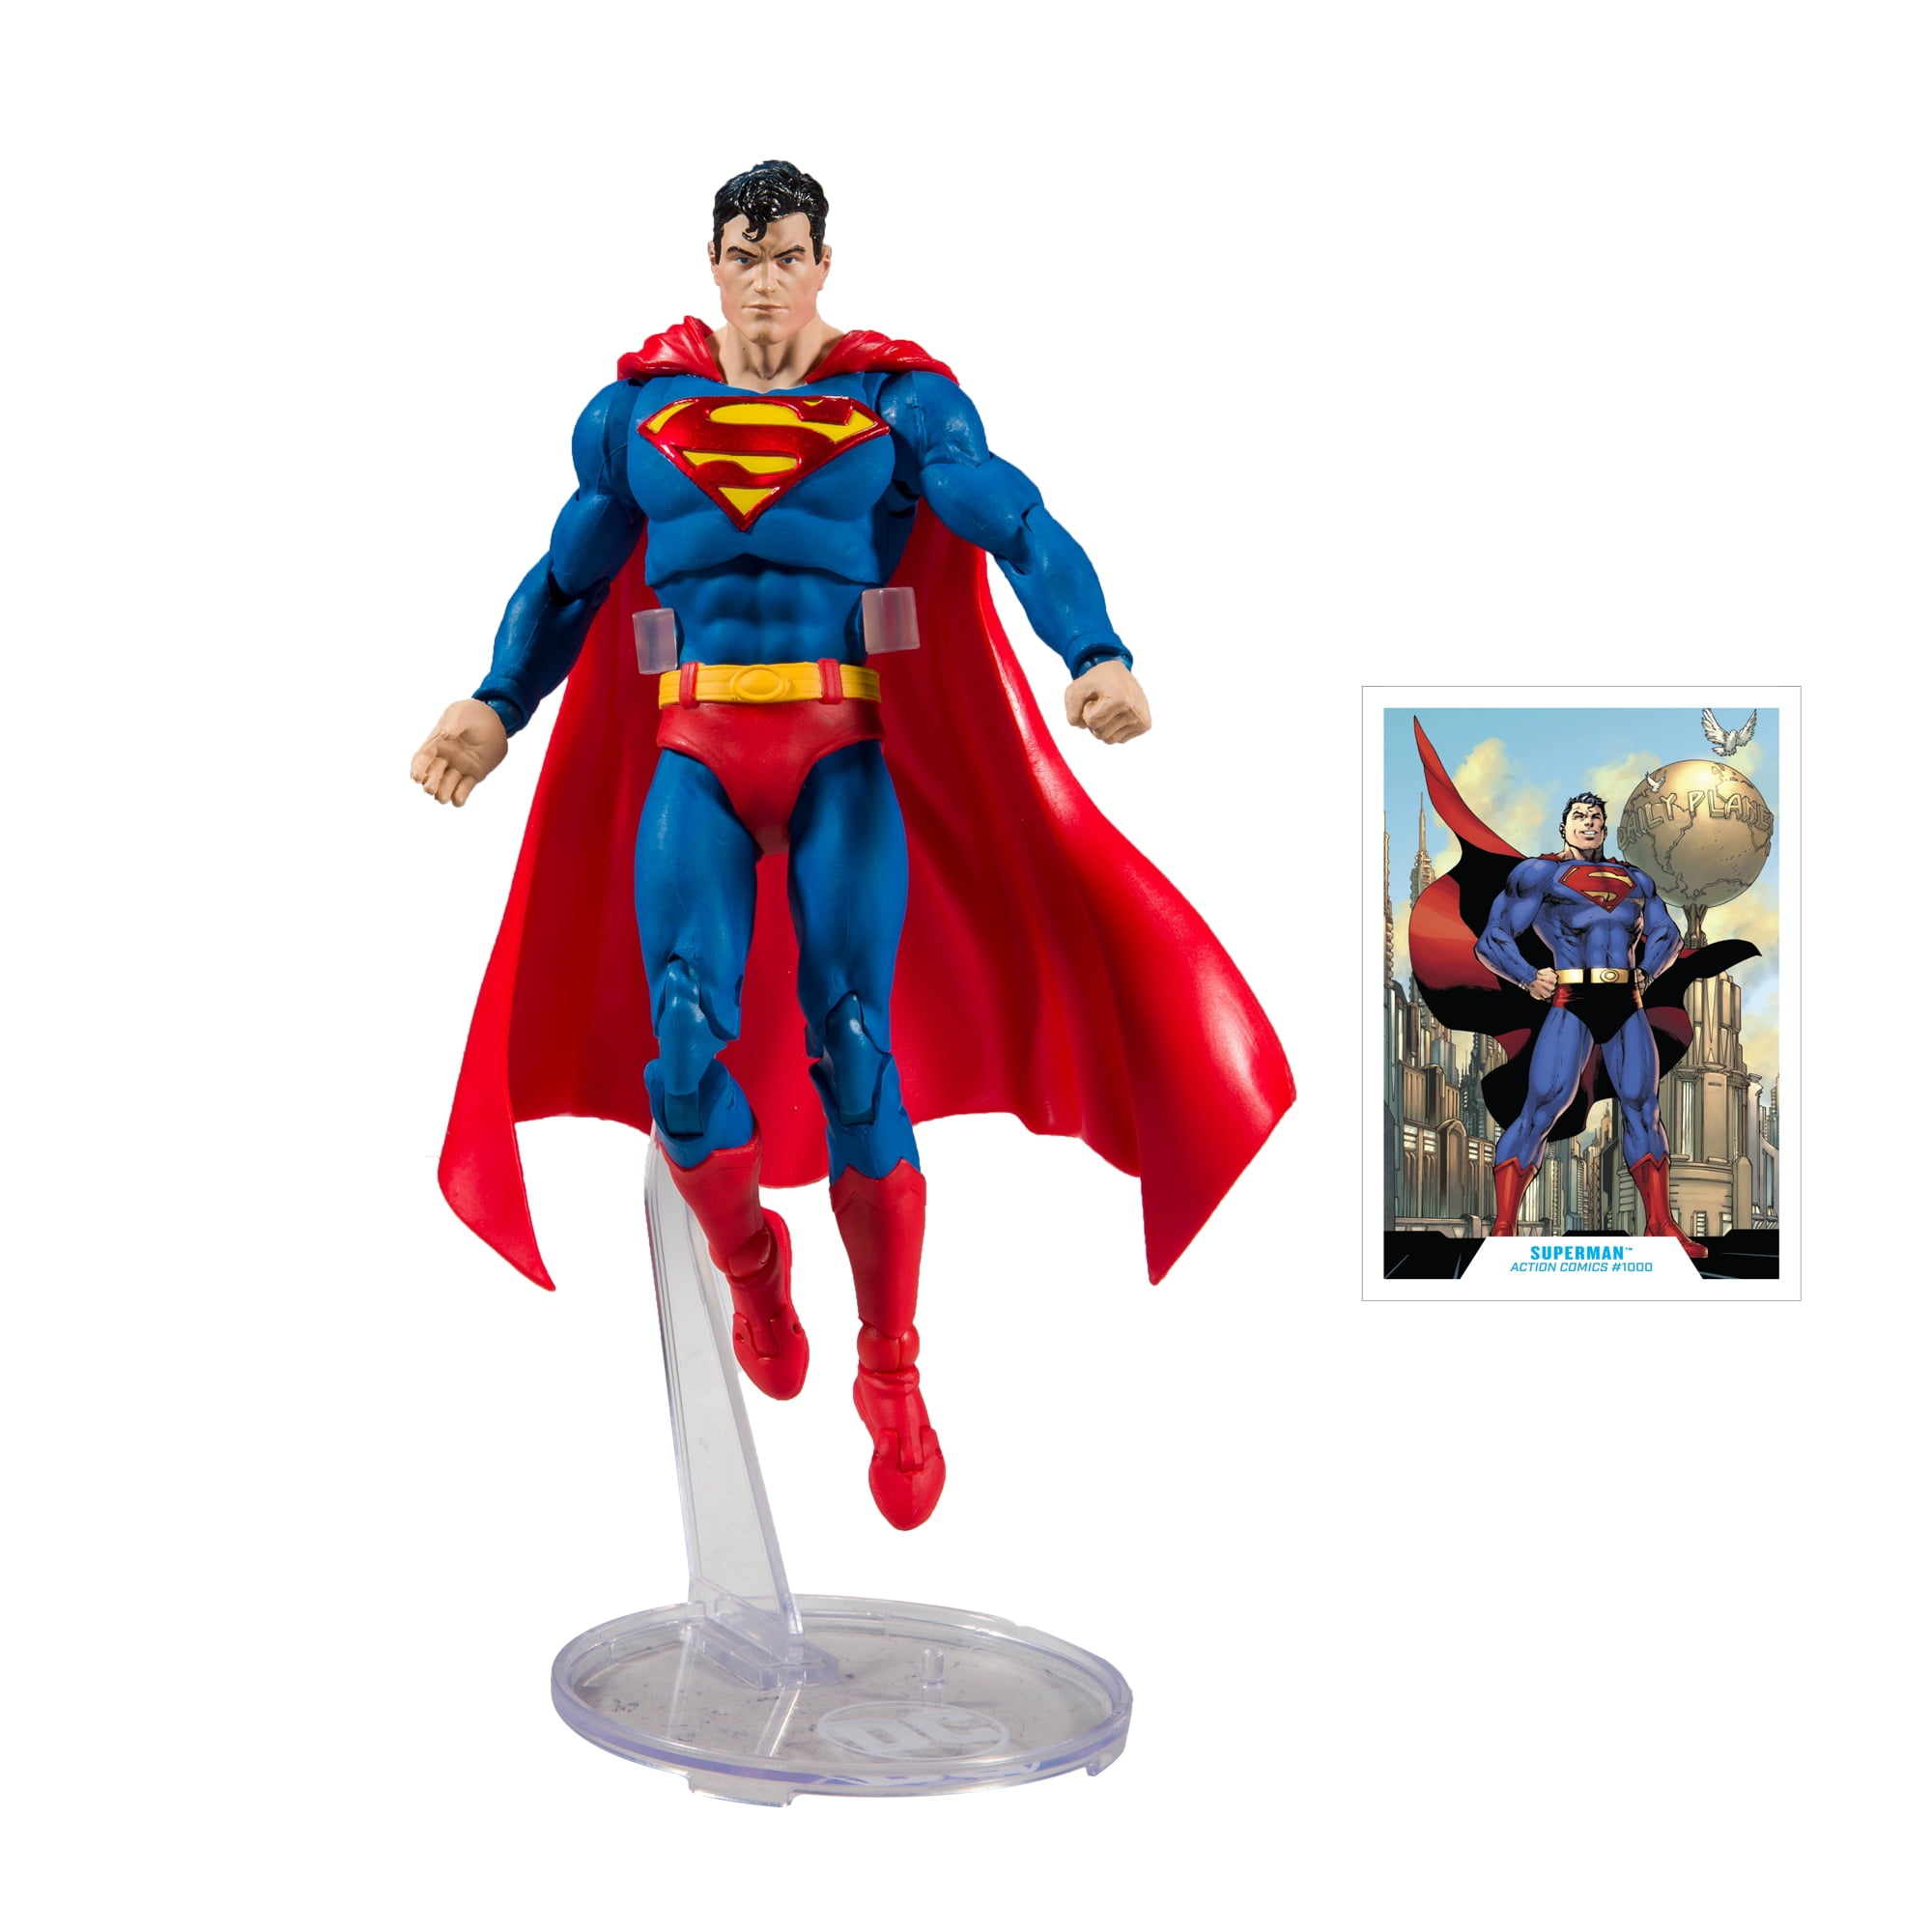 Superman Toys - Walmart.com